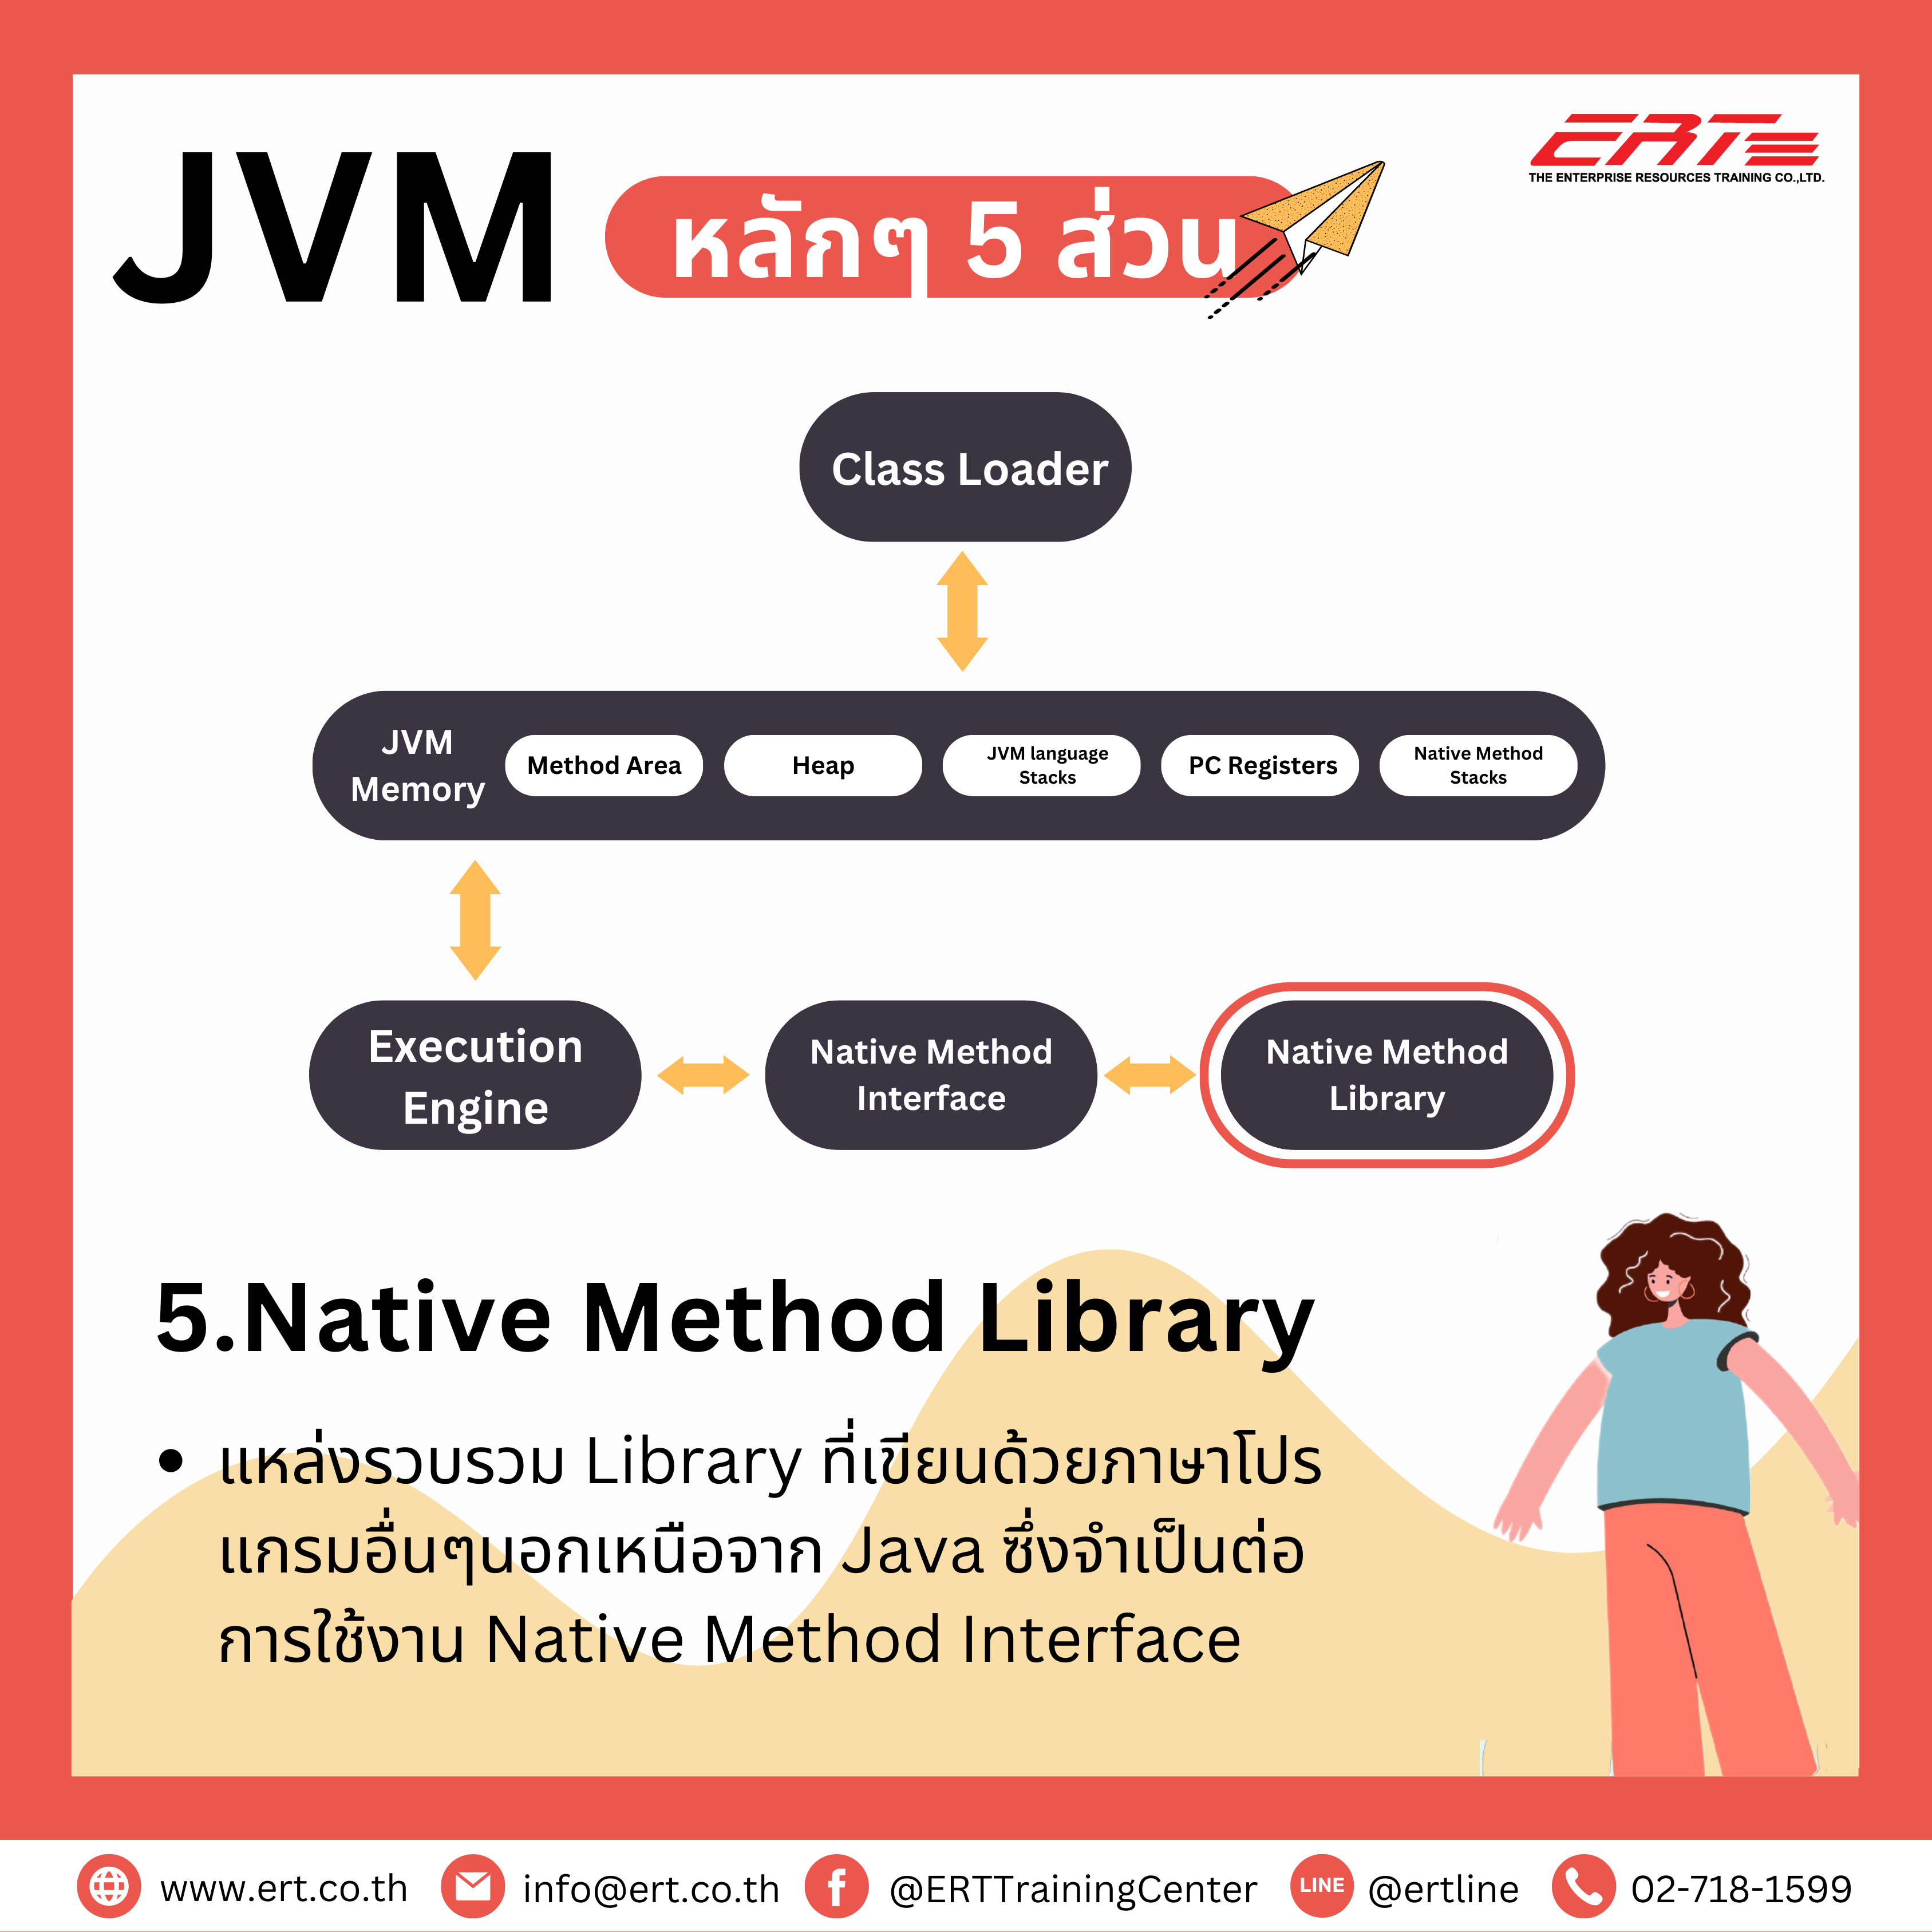 JVM คืออะไร